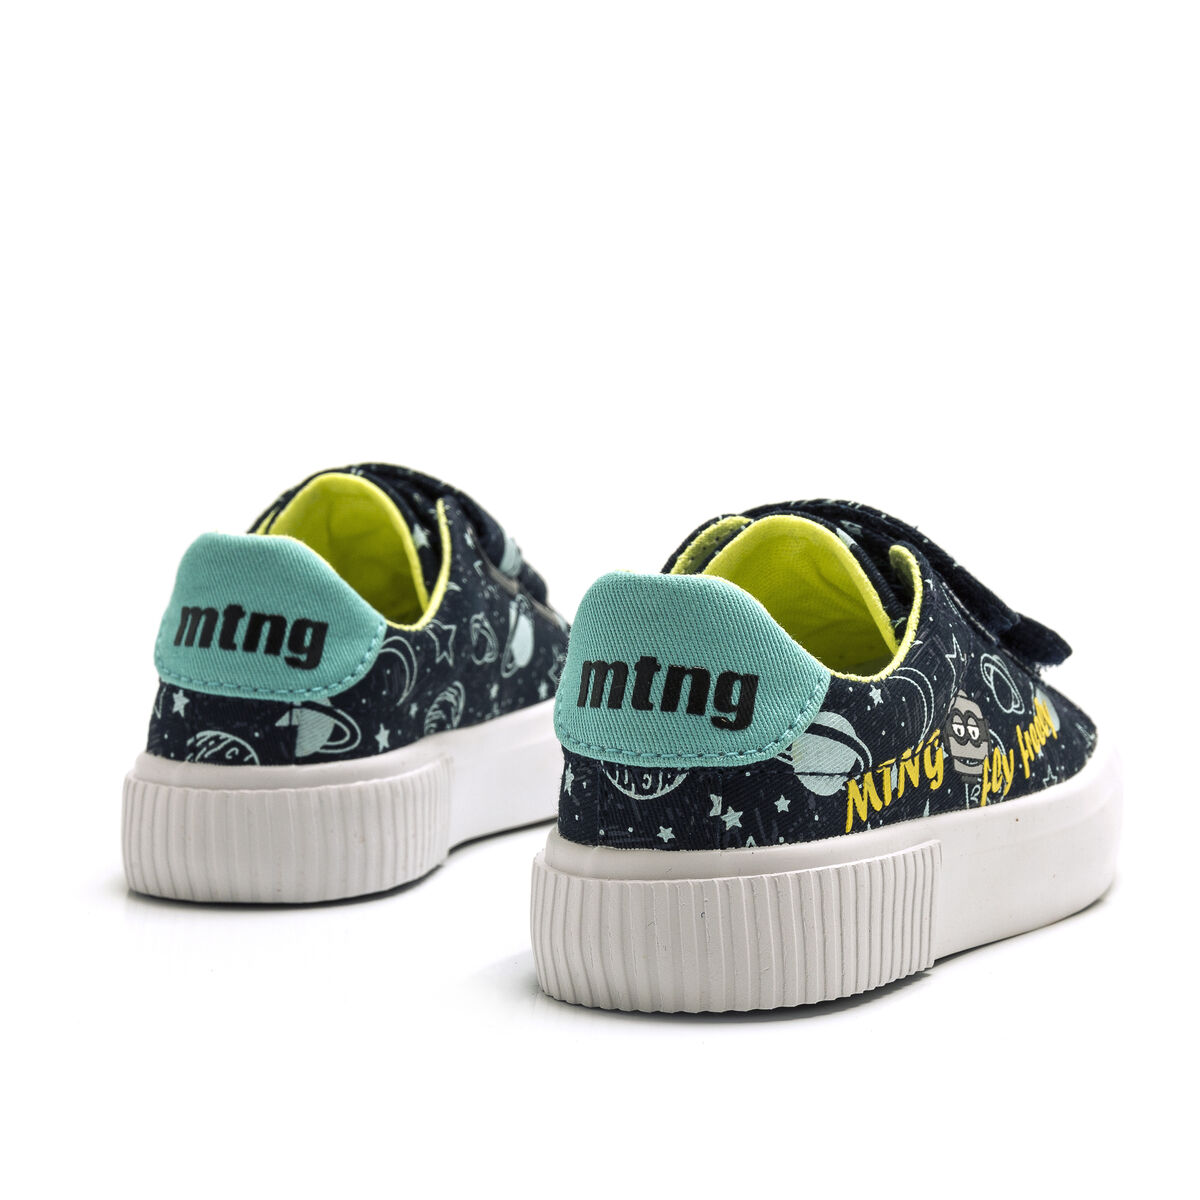 Zapatillas de Nino modelo REMIX de MTNG image number 3